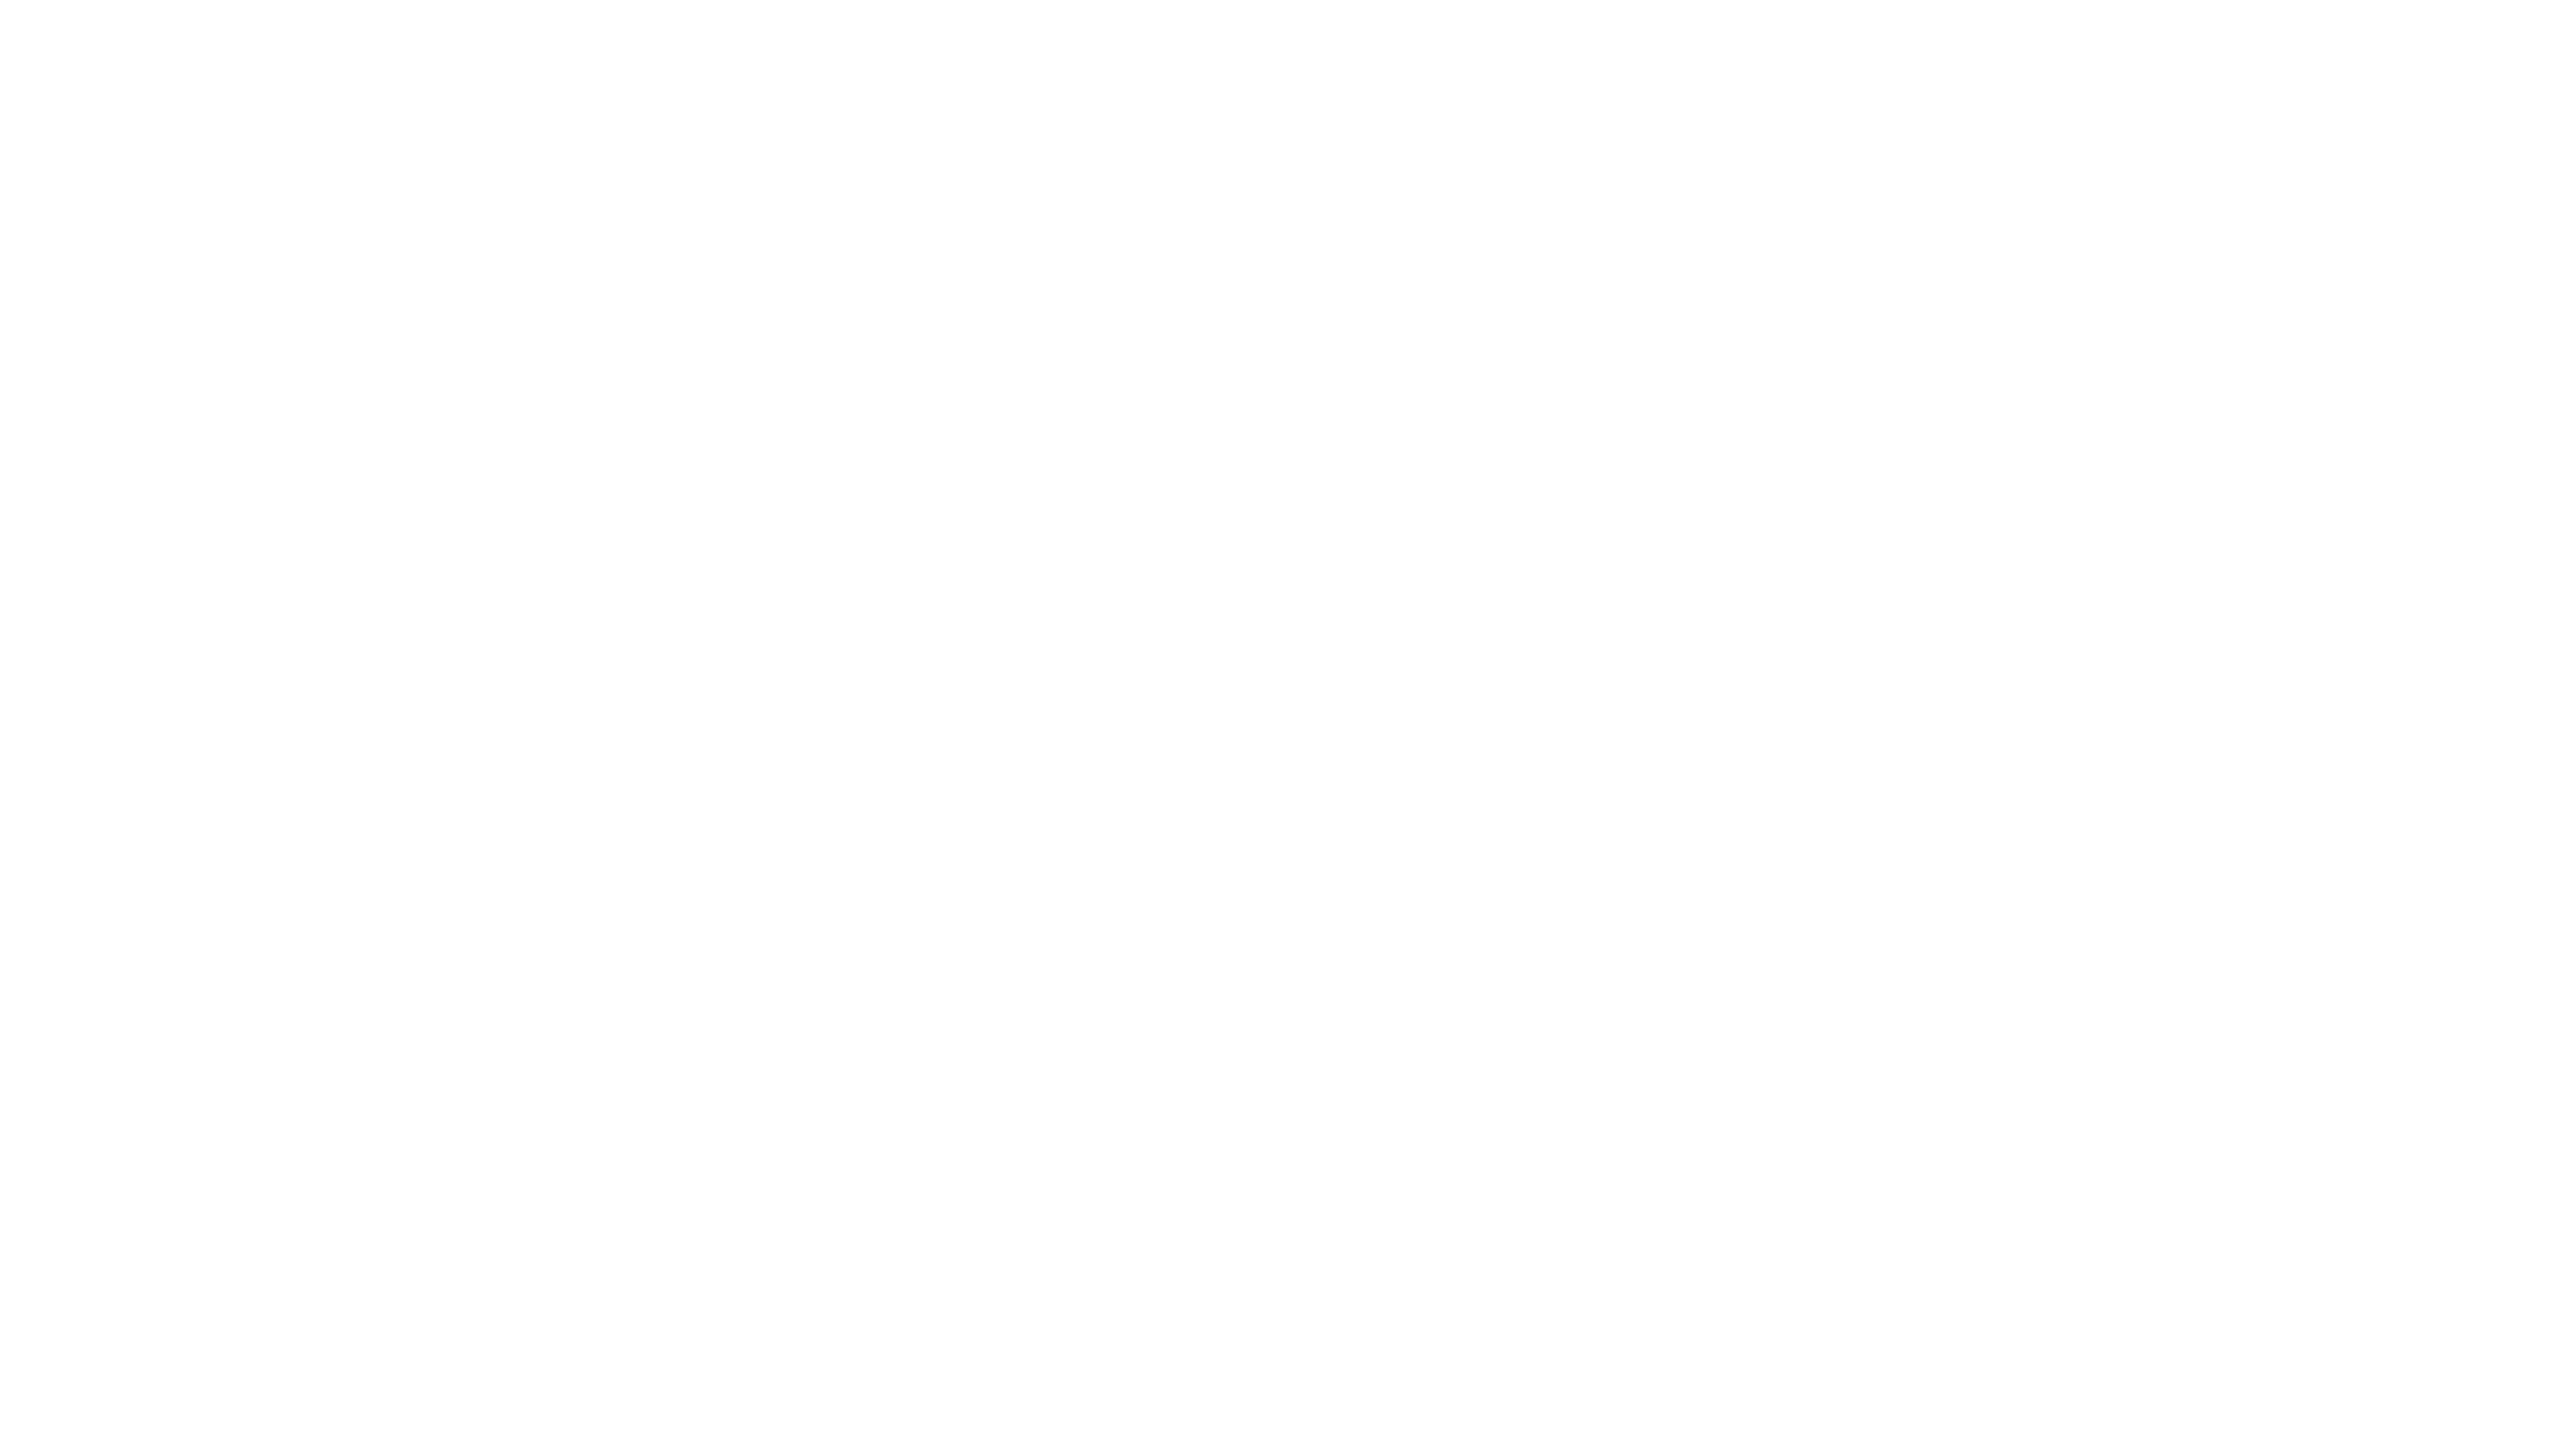 White CARE International 'hands logo' on green background